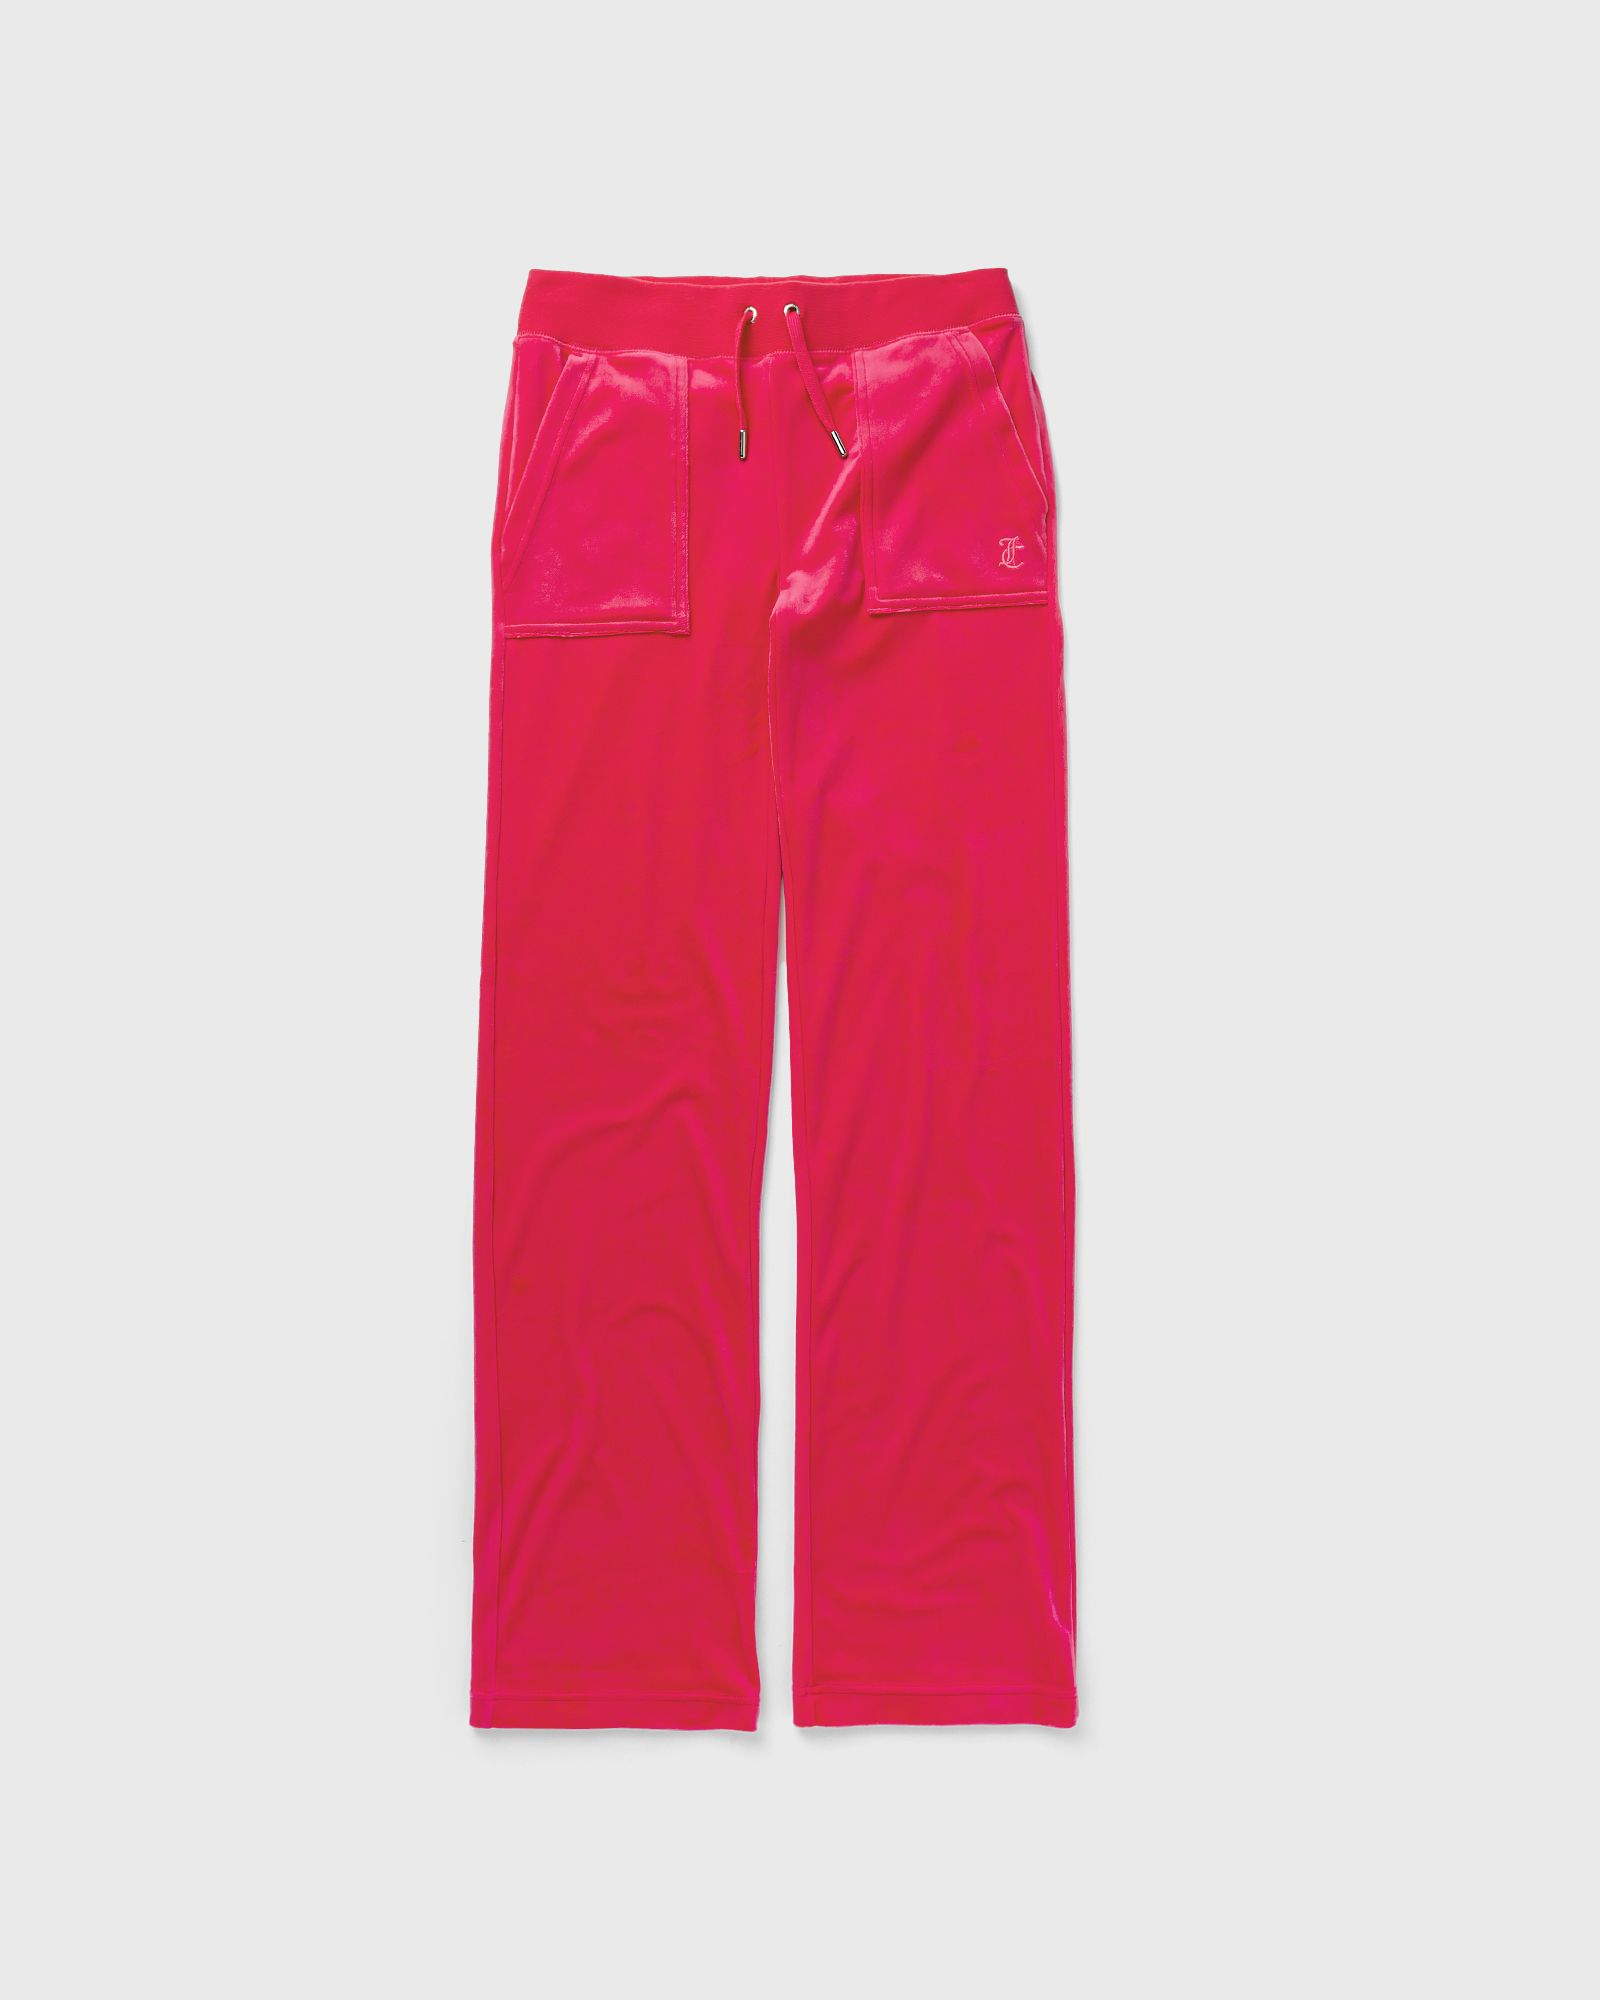 Juicy Couture - wmns classic velour del ray pant women sweatpants pink in größe:l